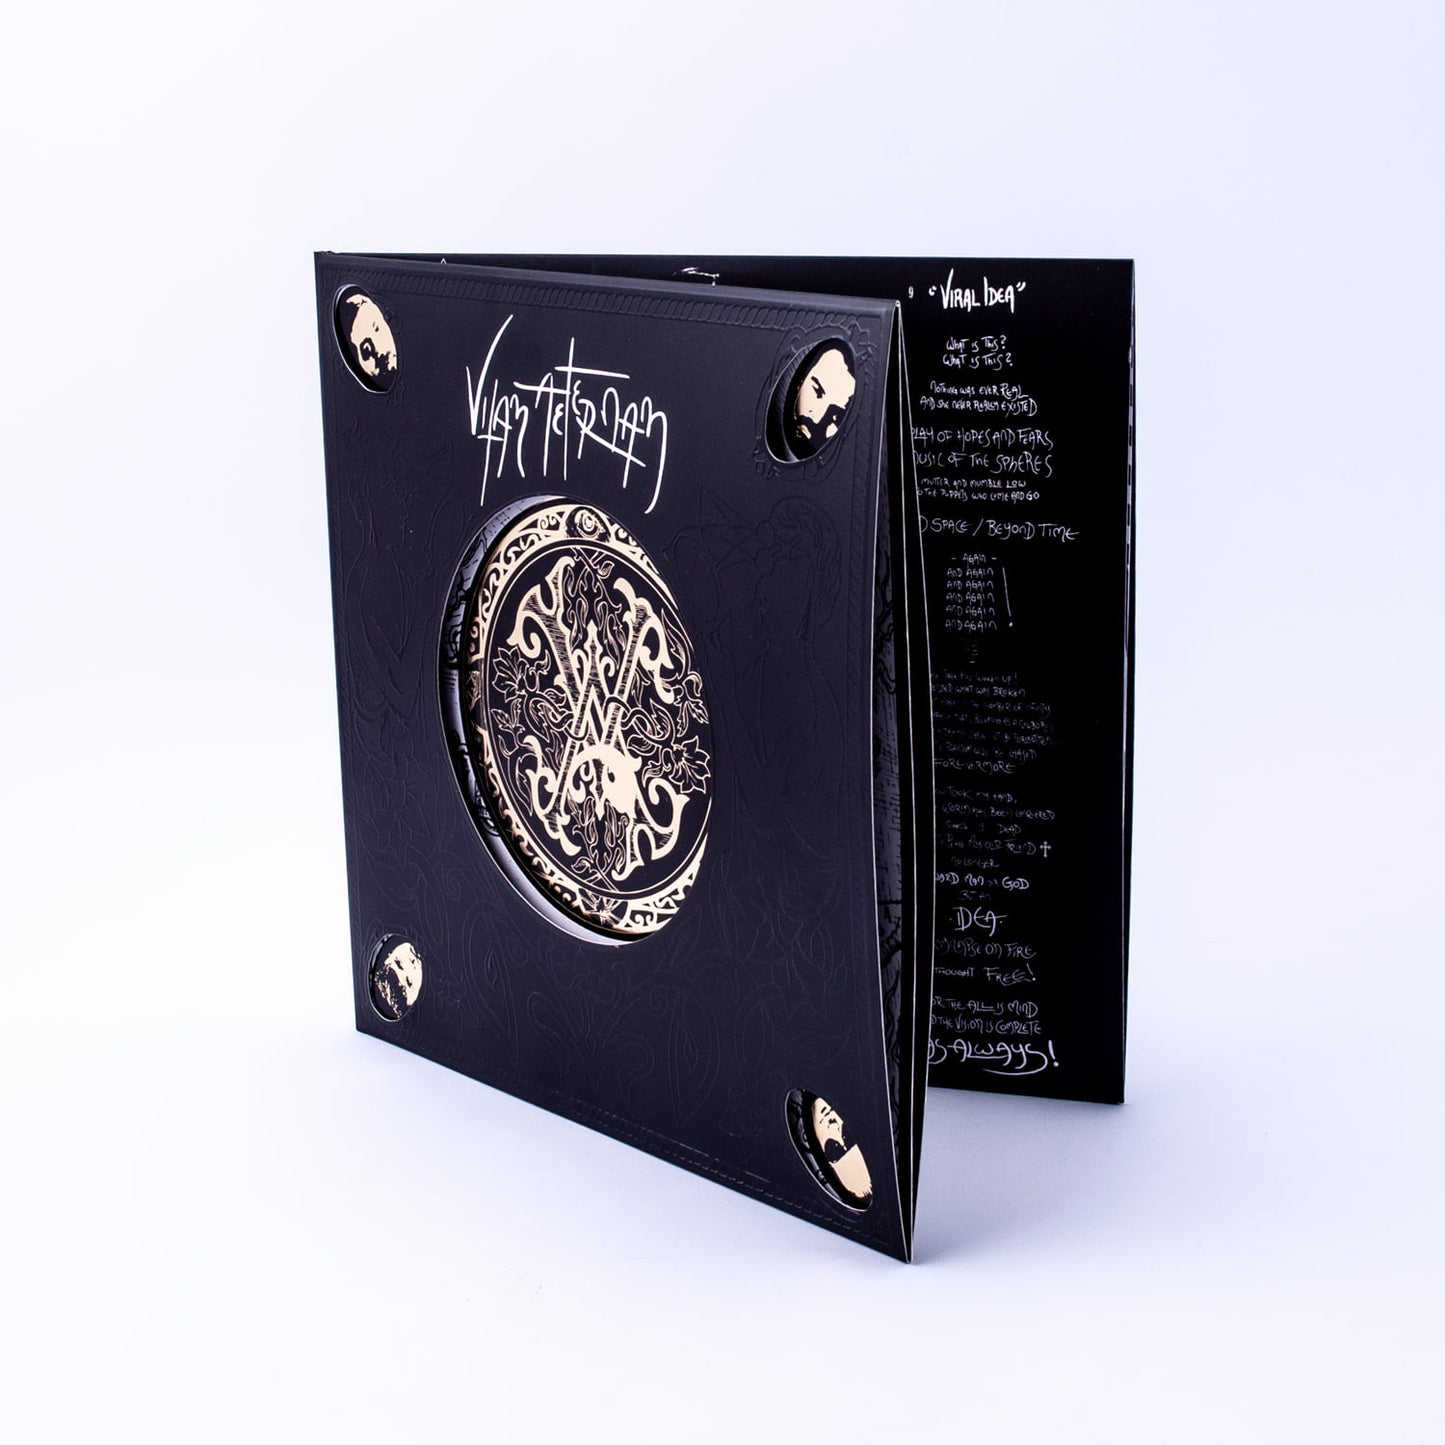 VITAM AETERNAM - The Self-Aware Frequency LP (SILVER)